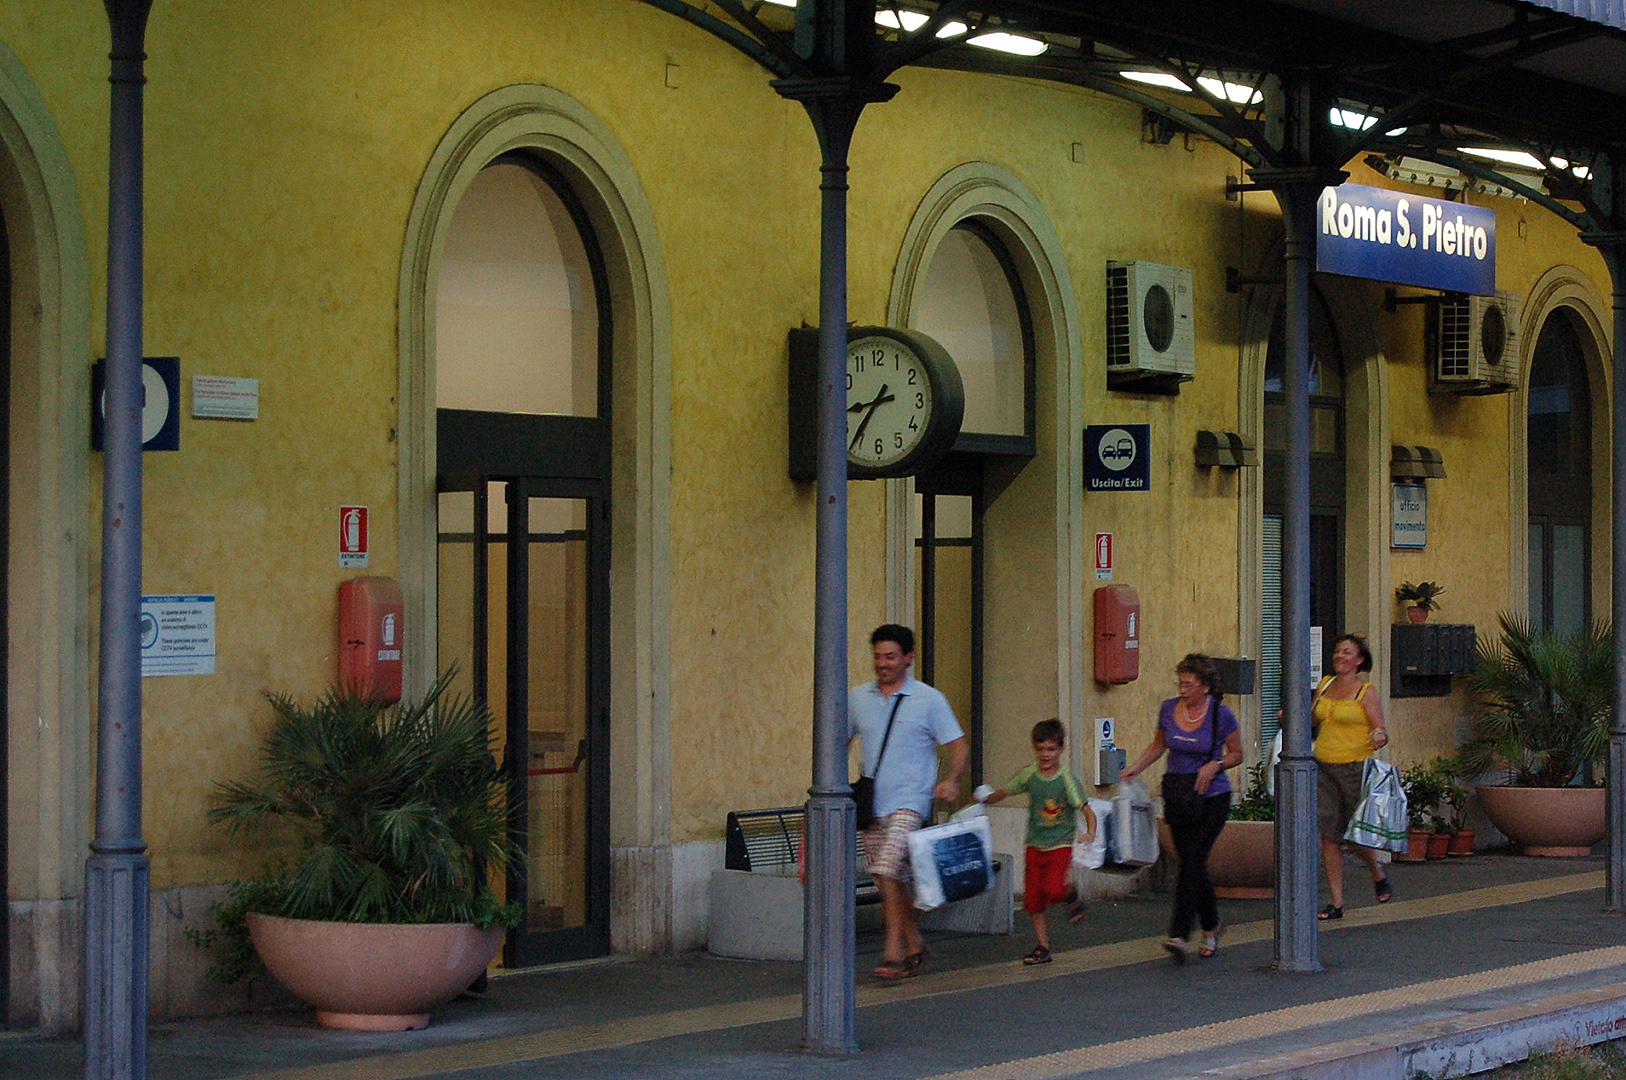 Station Rome San Pietro, Rome, Italië; Roma San Pietro railway station, Rome, Italy